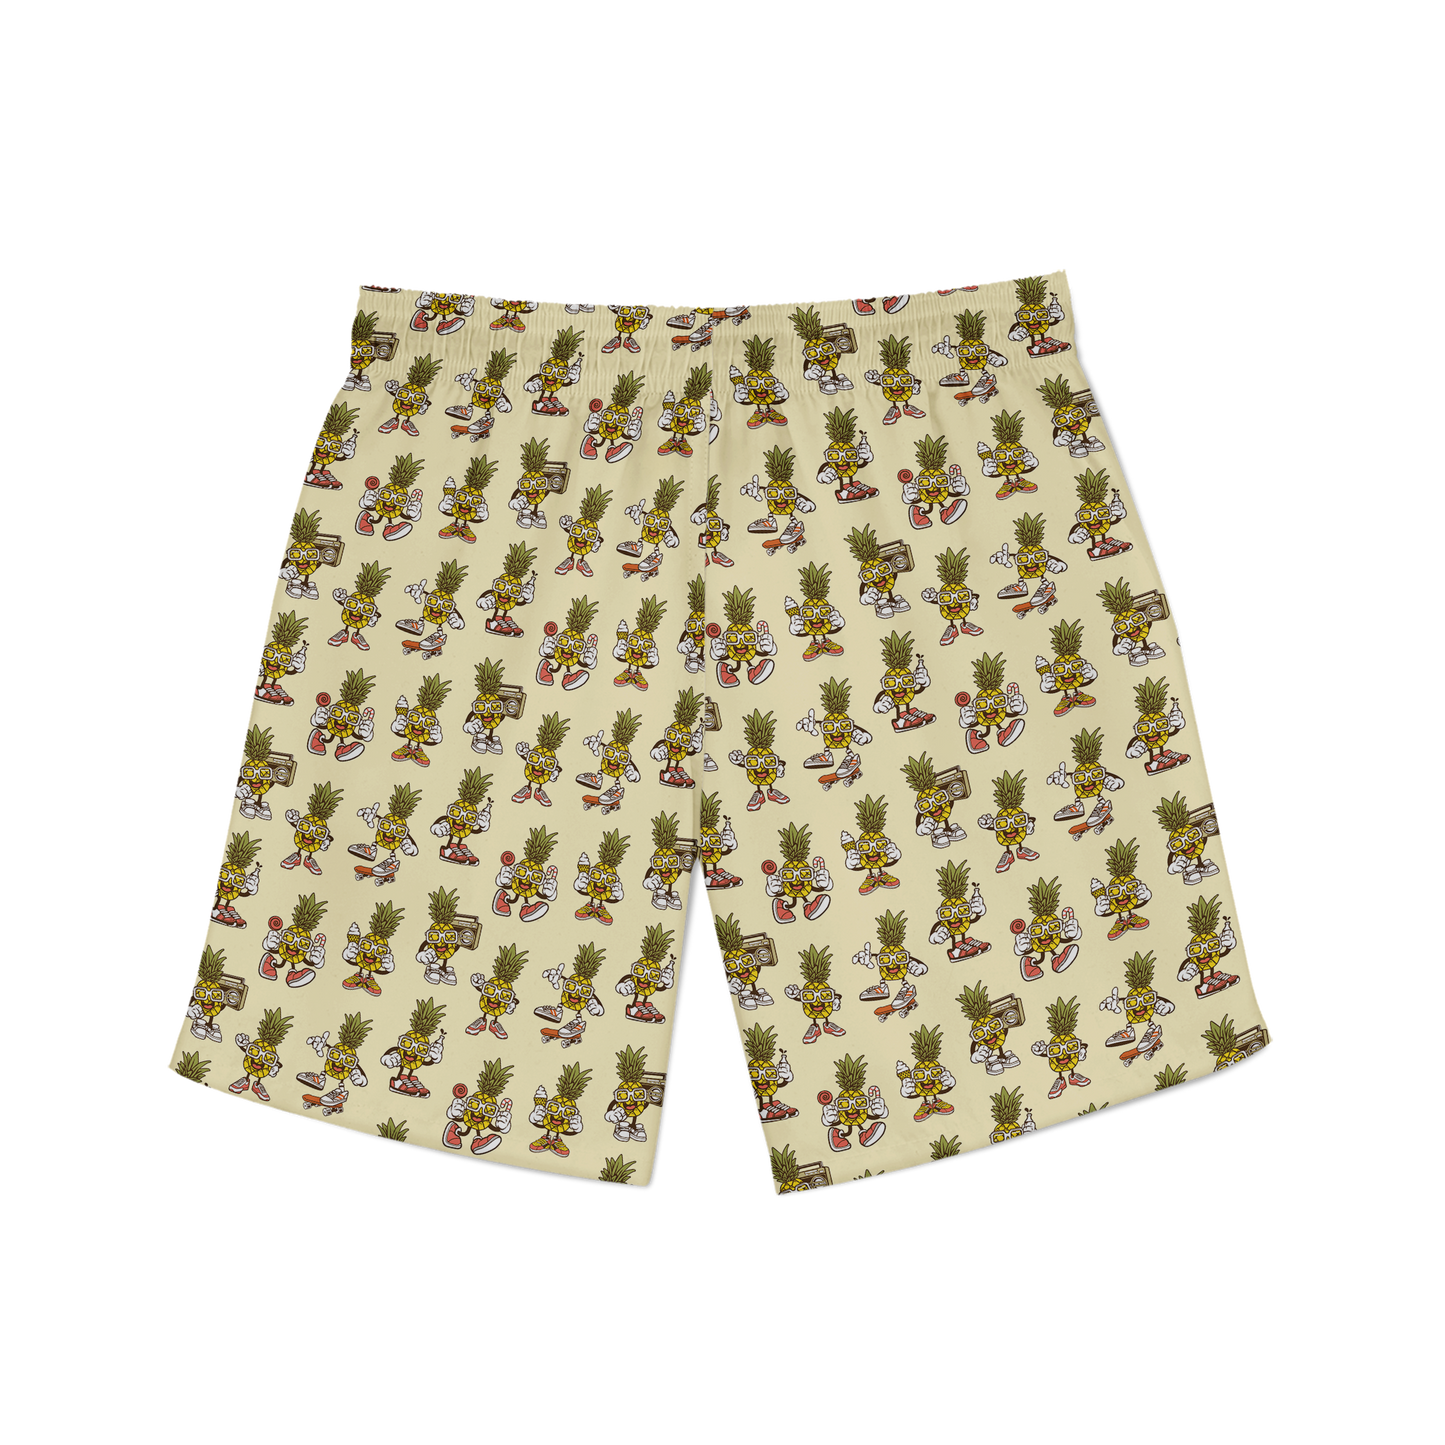 Pineapple Man Athletic Shorts